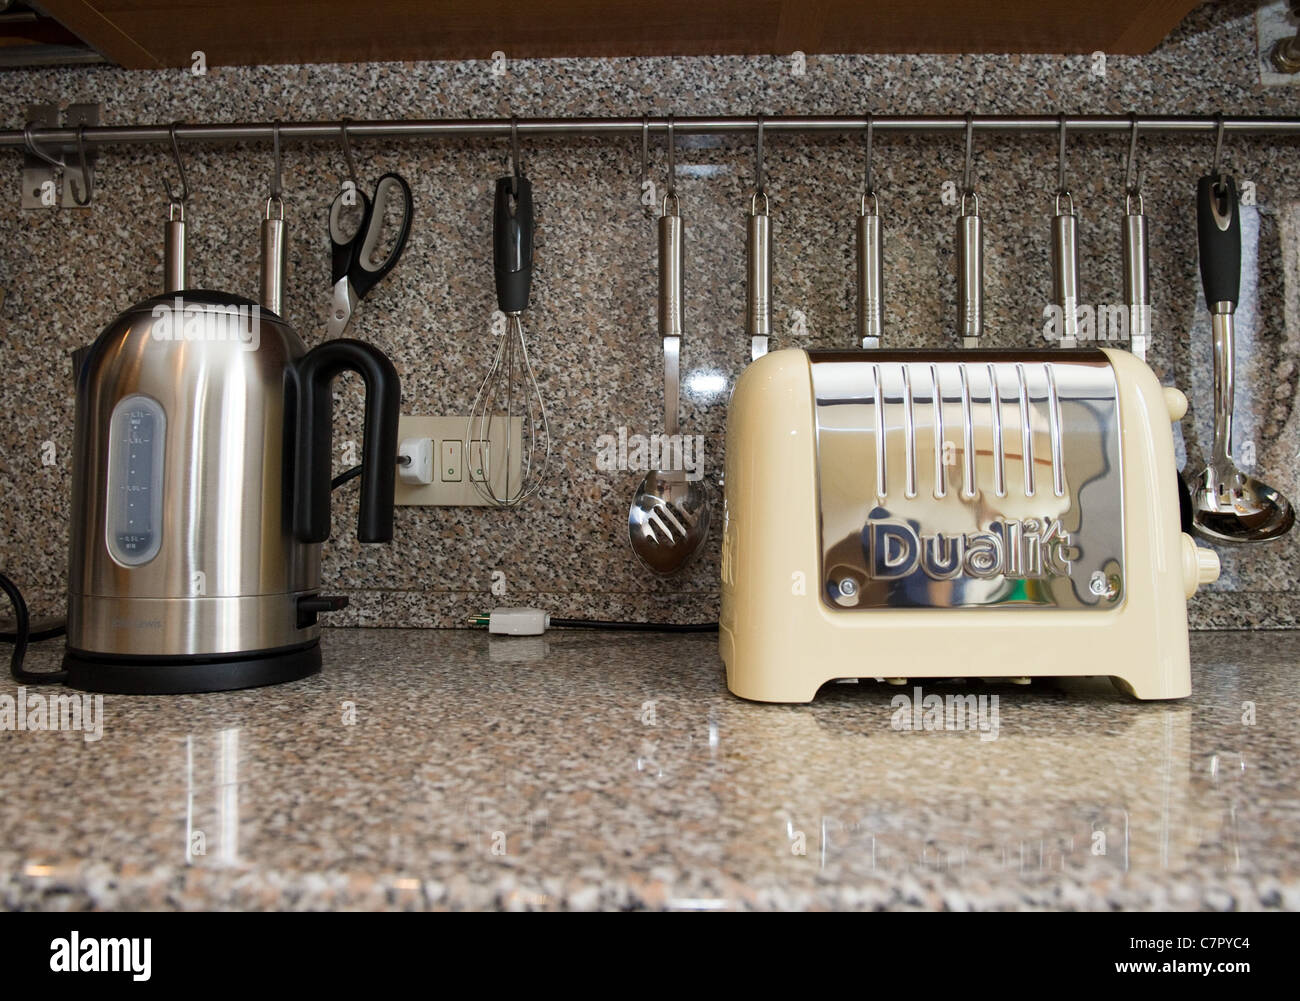 Dualit Vario two slice toaster in orange ~ Fresh Design Blog